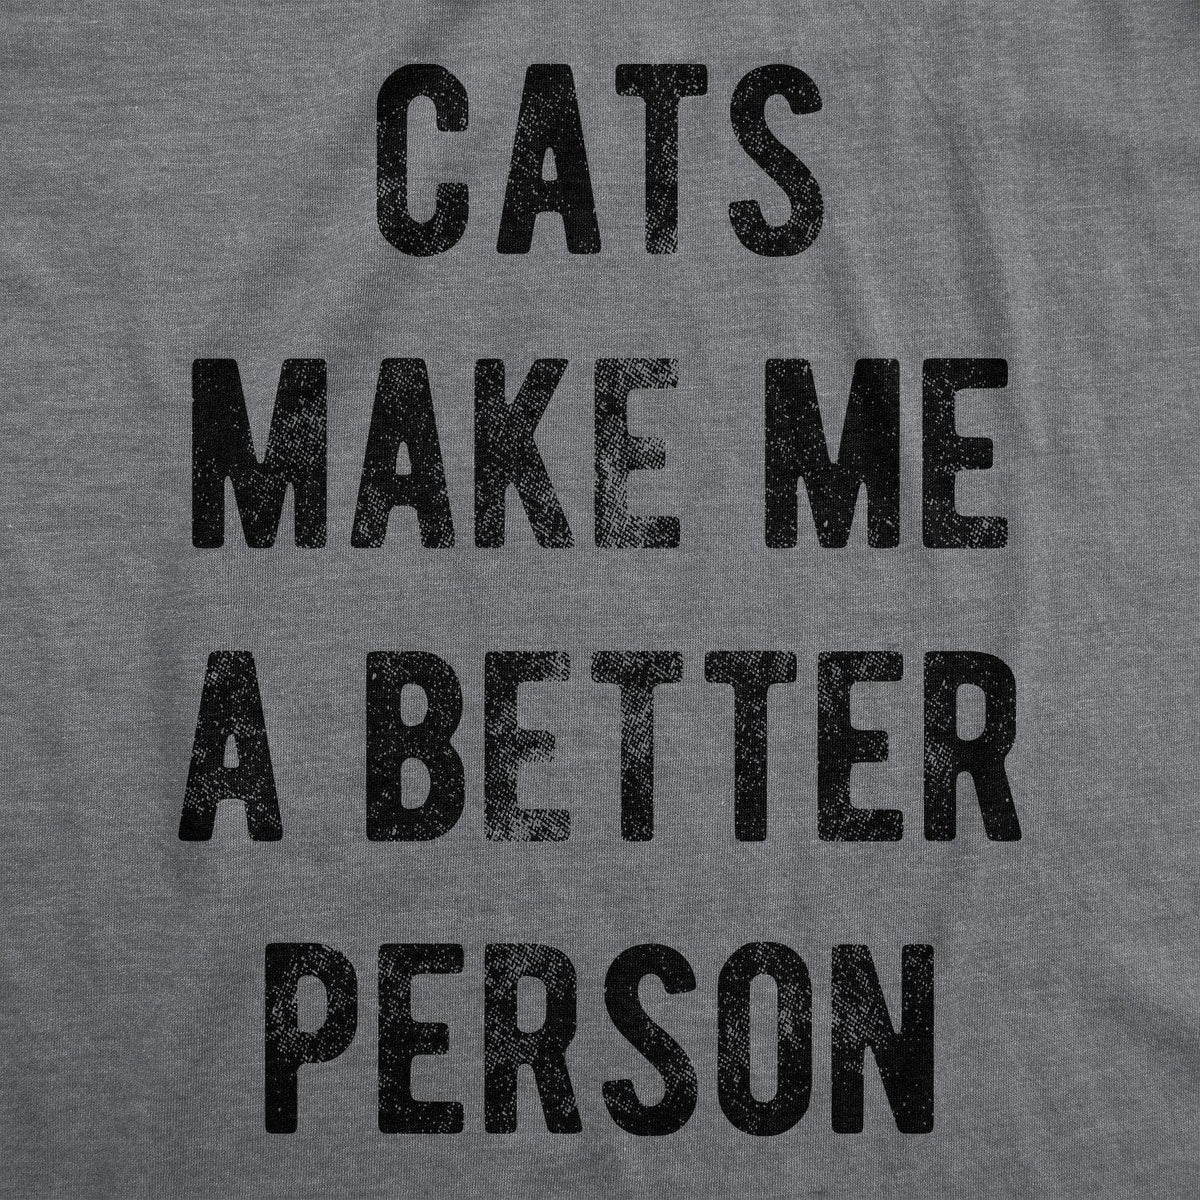 Cats Make Me A Better Person Women&#39;s Tshirt - Crazy Dog T-Shirts